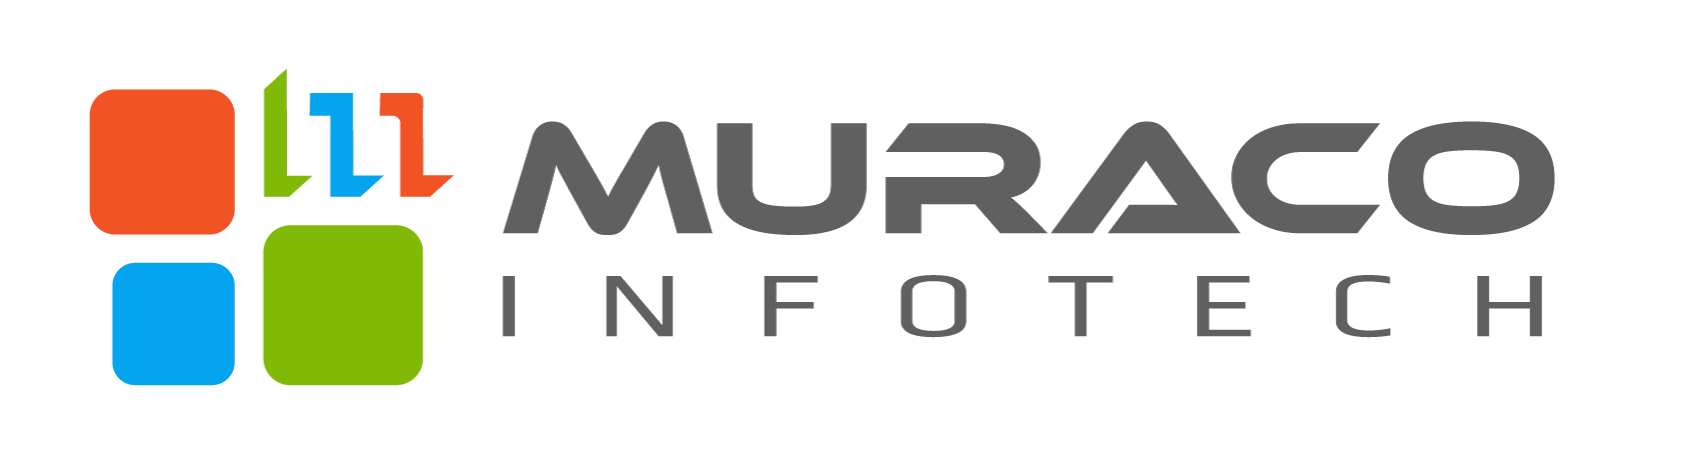 MURACO Infotech